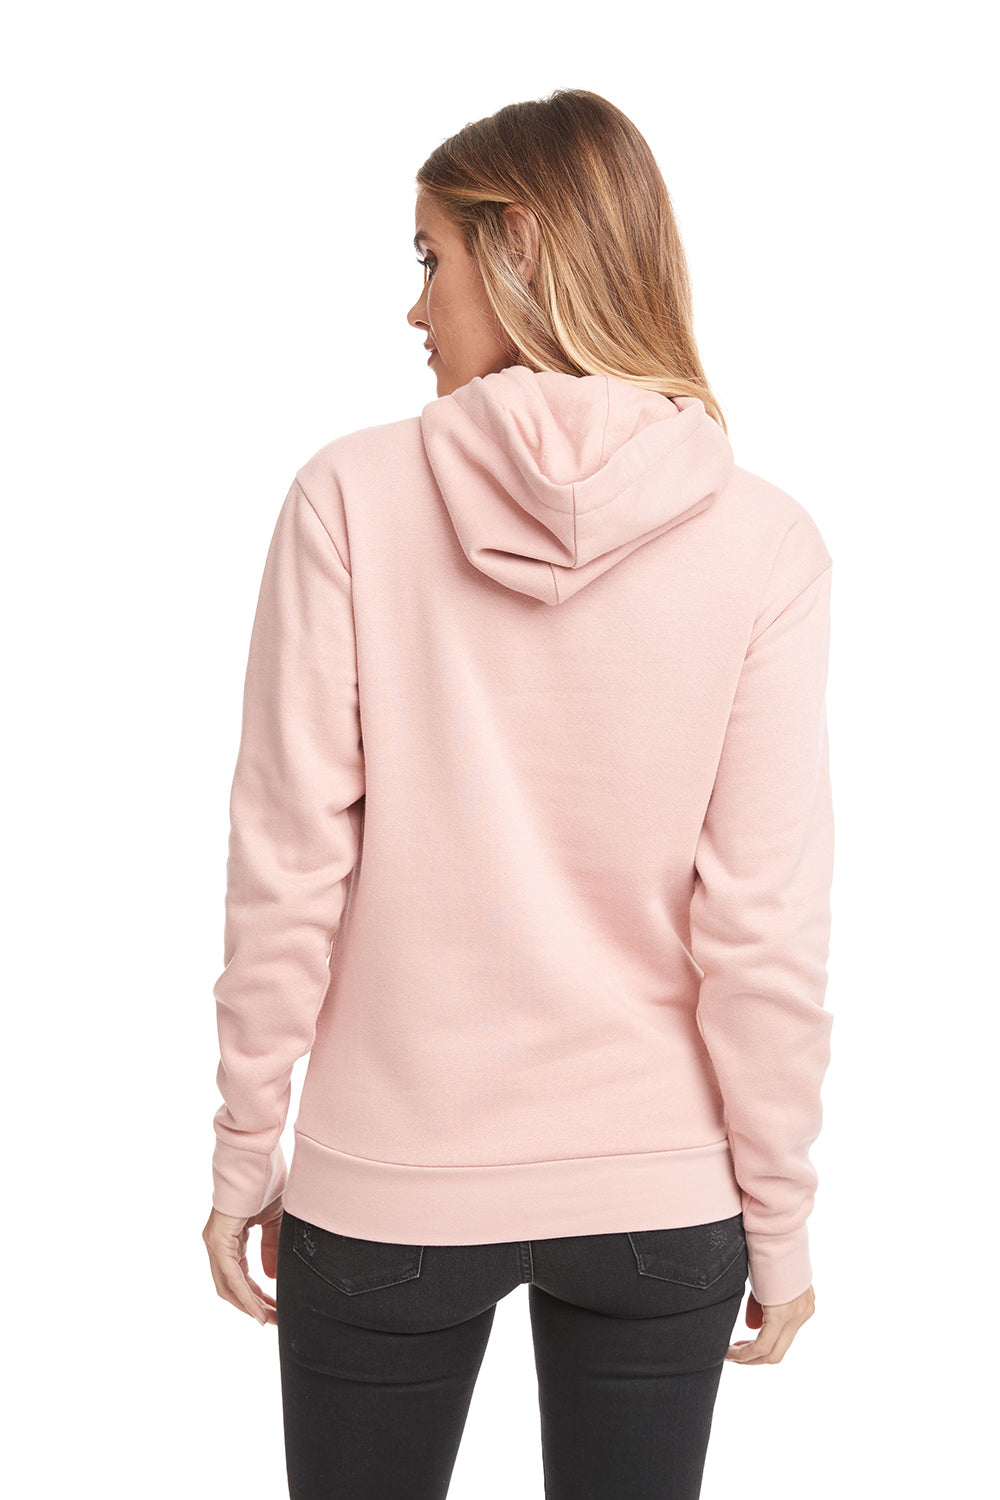 Next Level 9303 Fleece Hooded Sweatshirt Hoodie Desert Pink Back